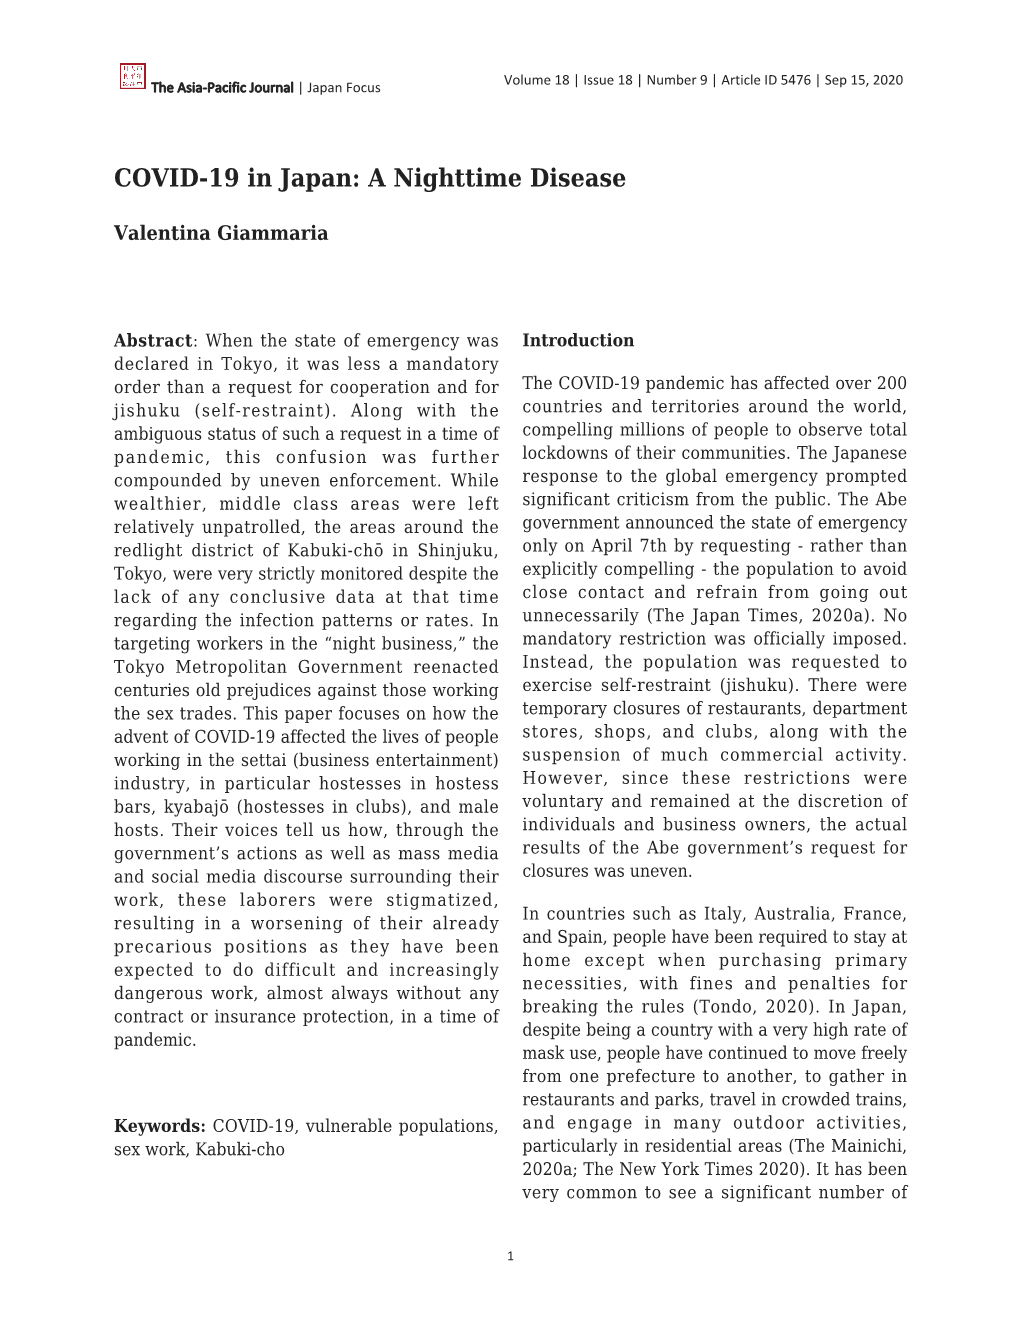 COVID-19 in Japan: a Nighttime Disease